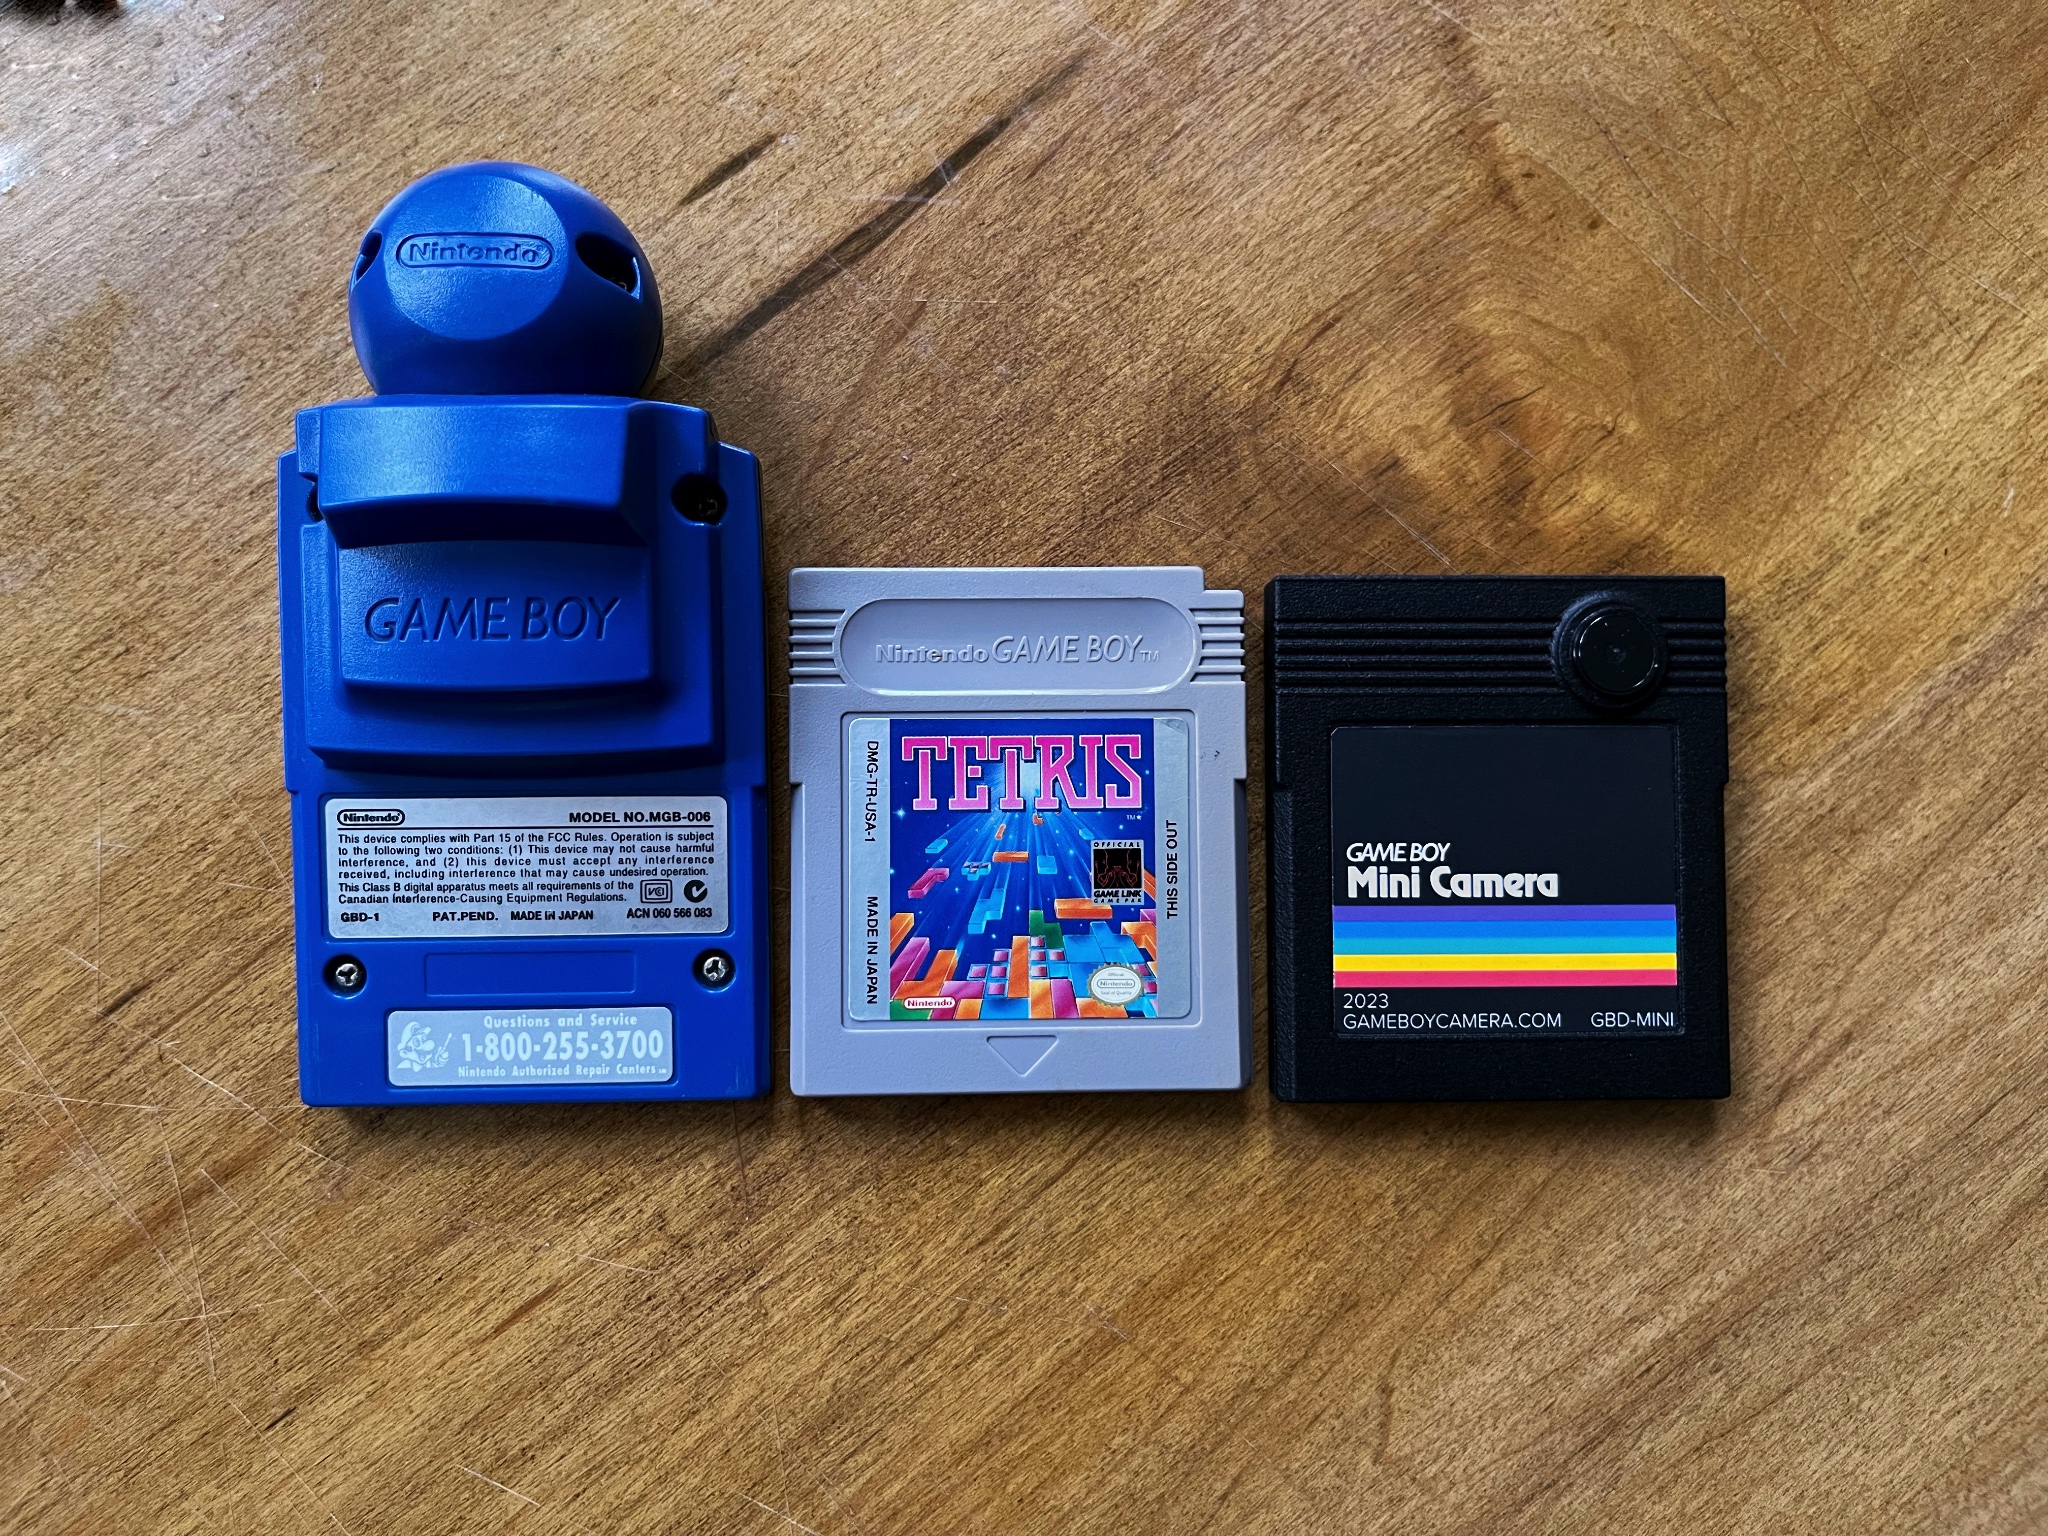 Comparing an original blue Game Boy Camera and a Tetris cart with the Mini Camera